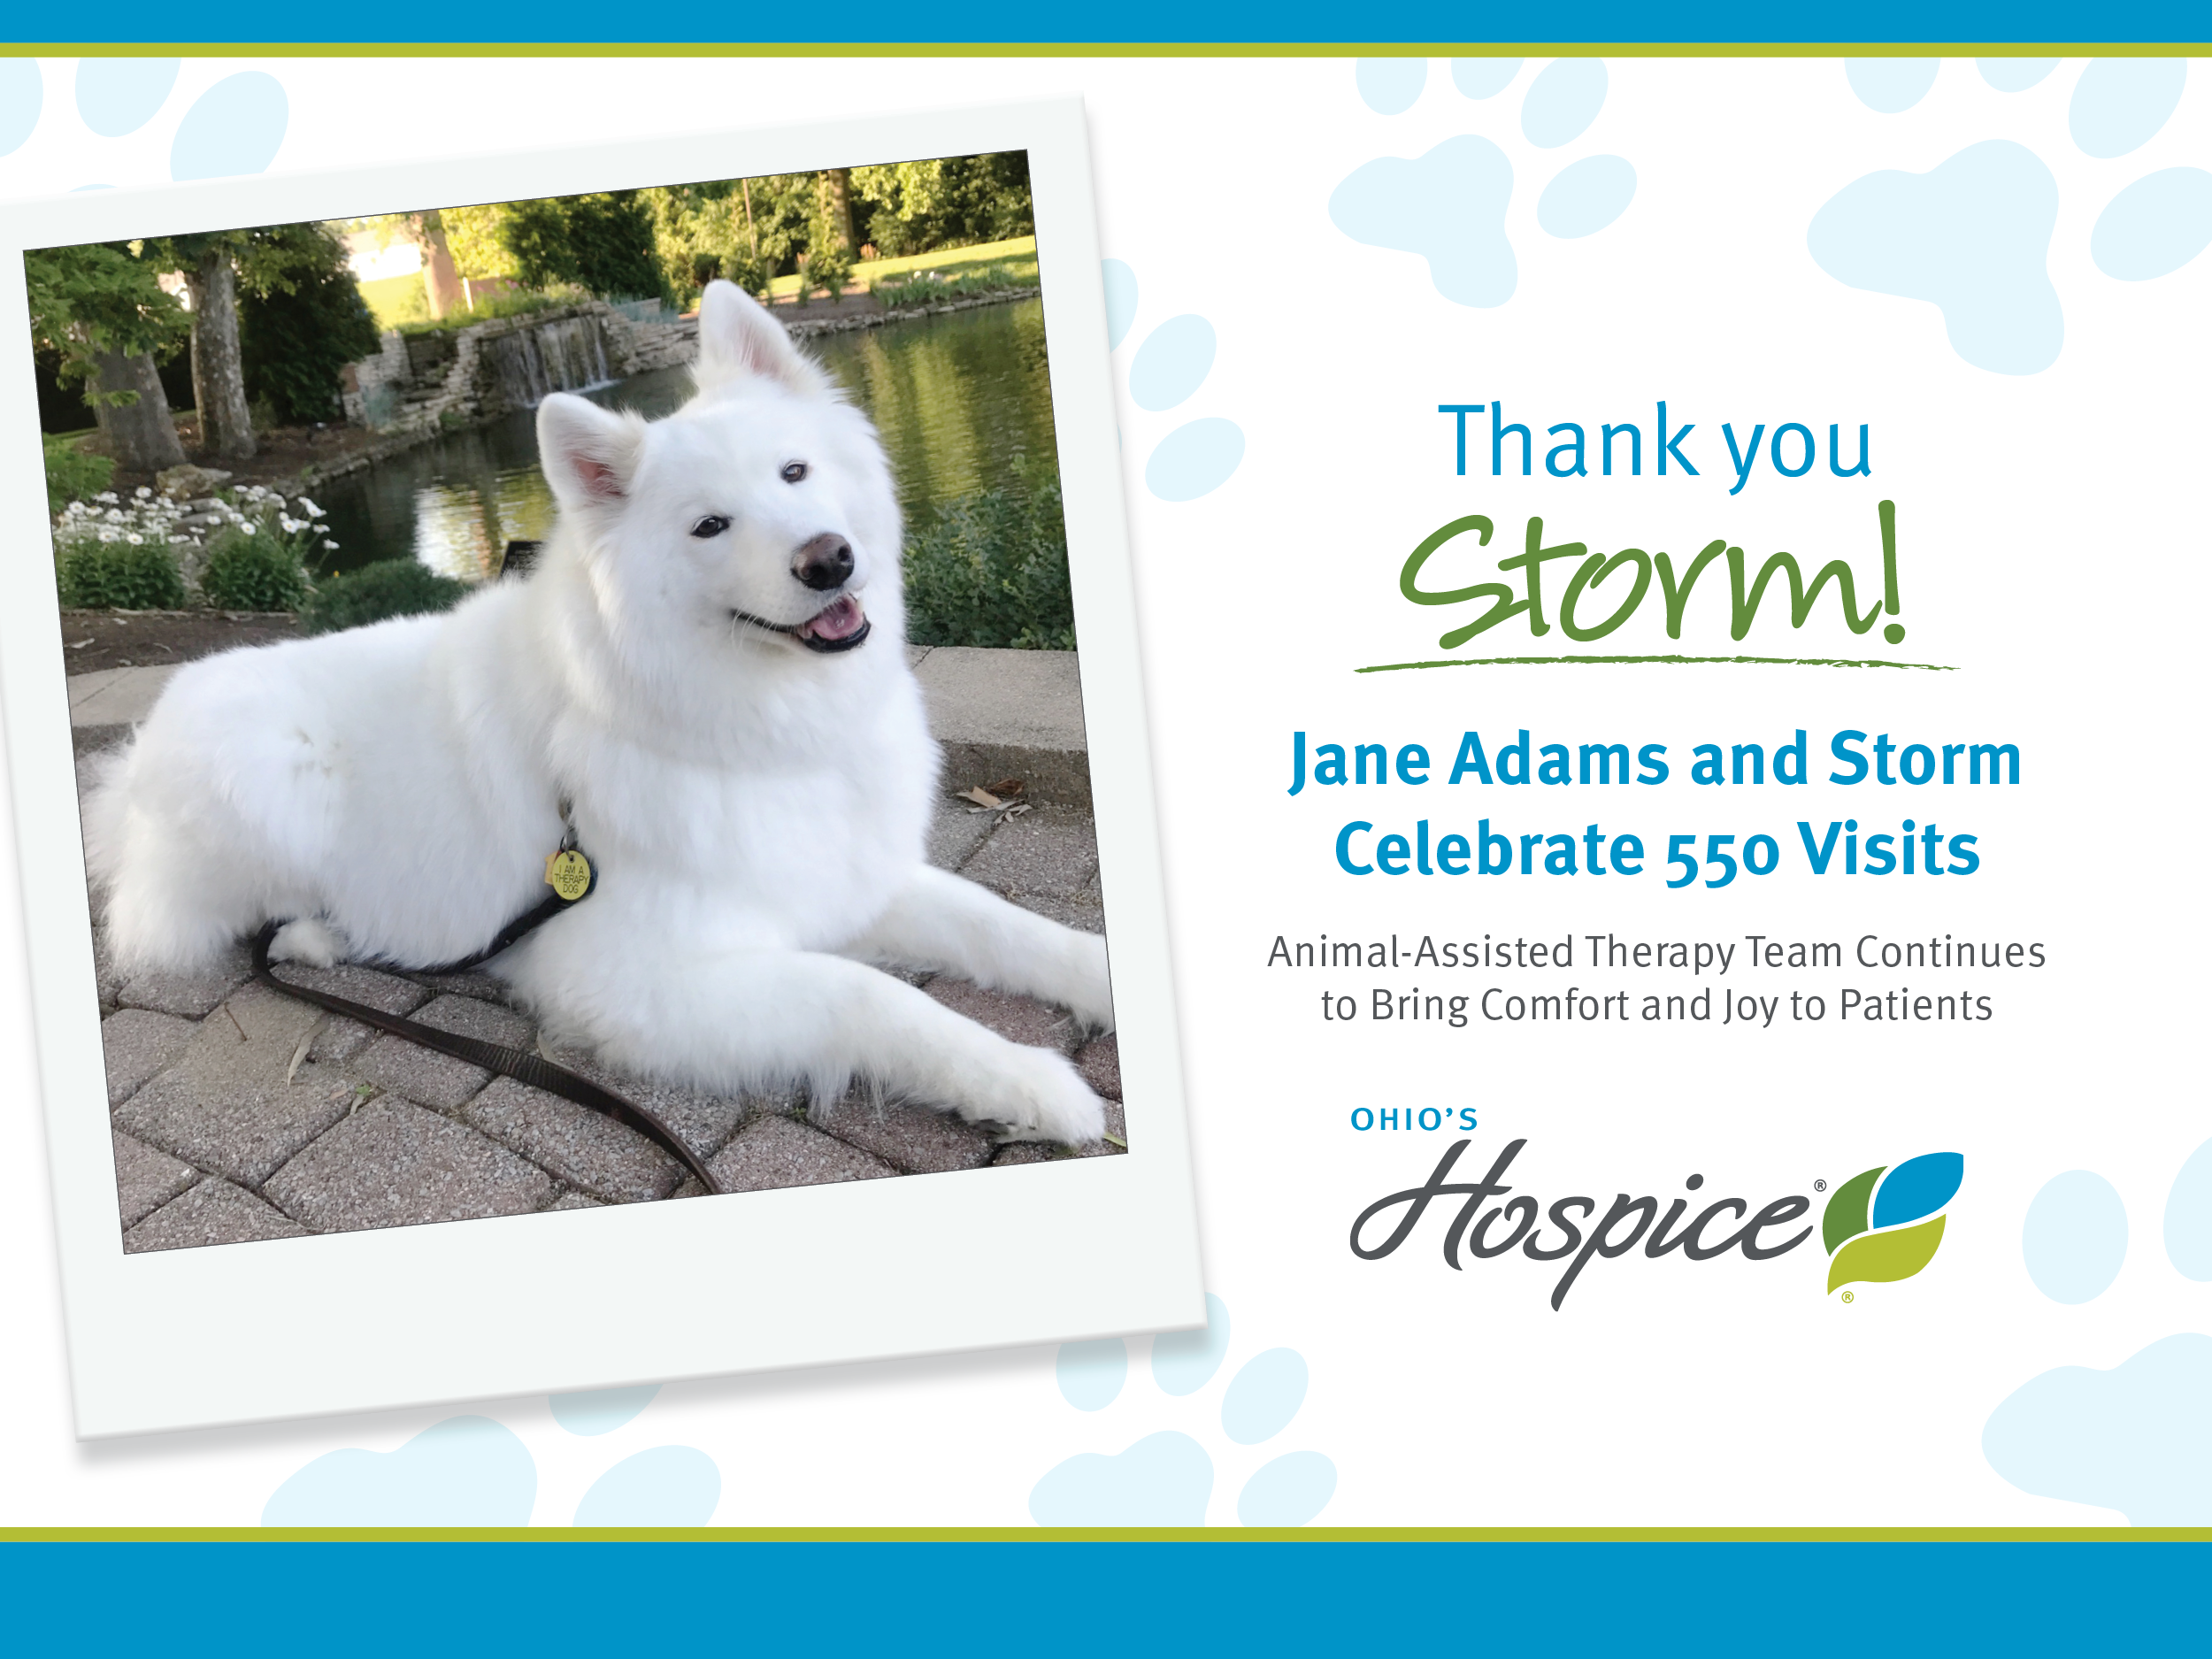 Jane Adams and Storm Celebrate 550 Visits